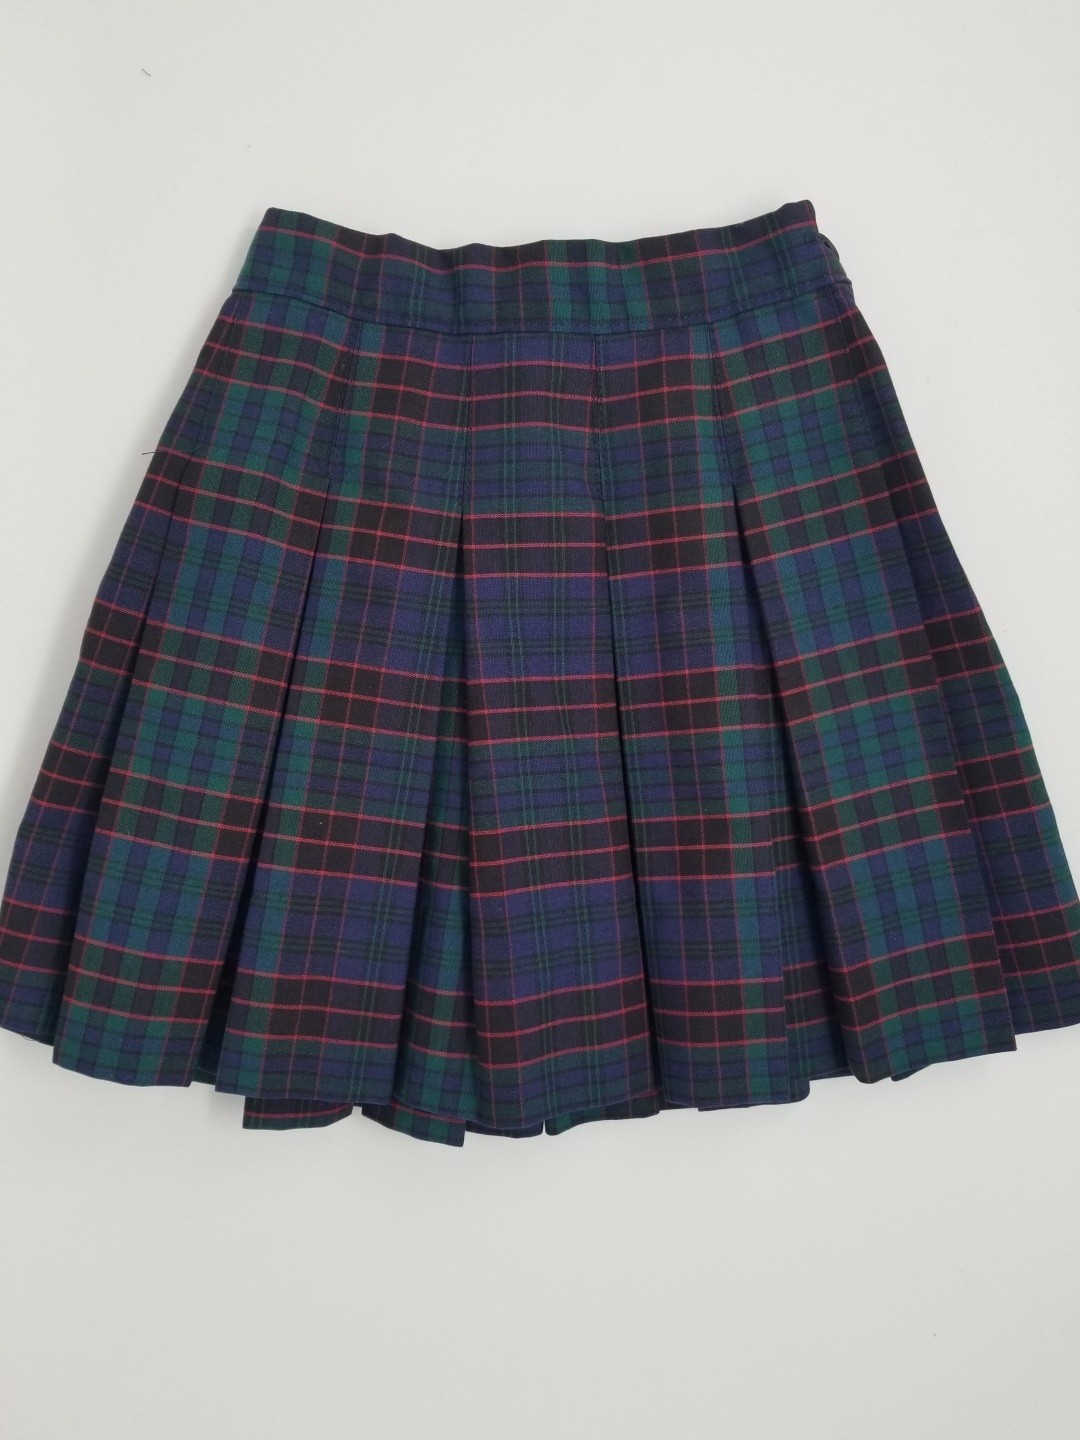 Stitch Down Pleat Skirt- Style 11-Plaid 19